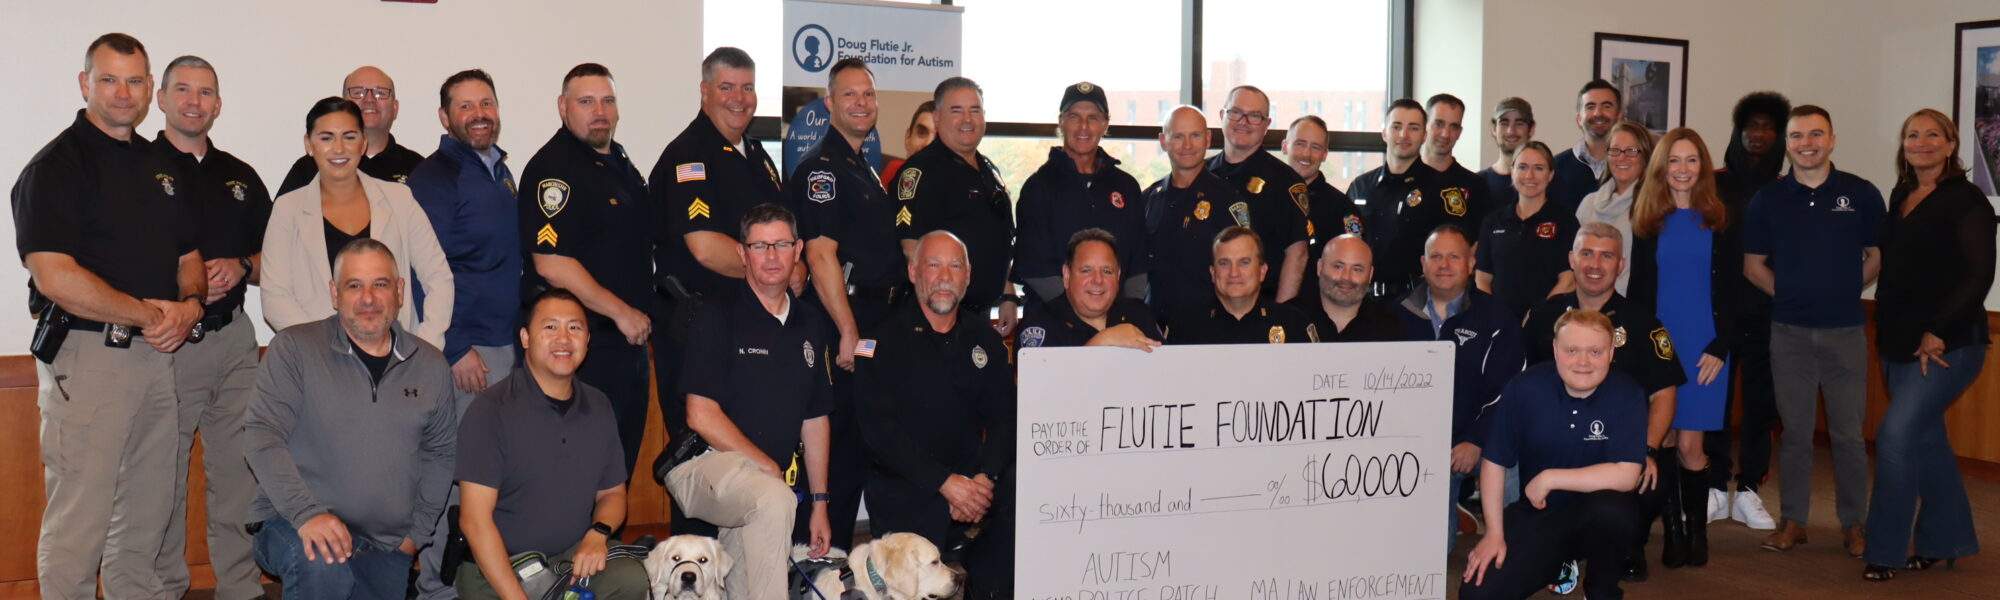 Cops with flutie foundation donation check